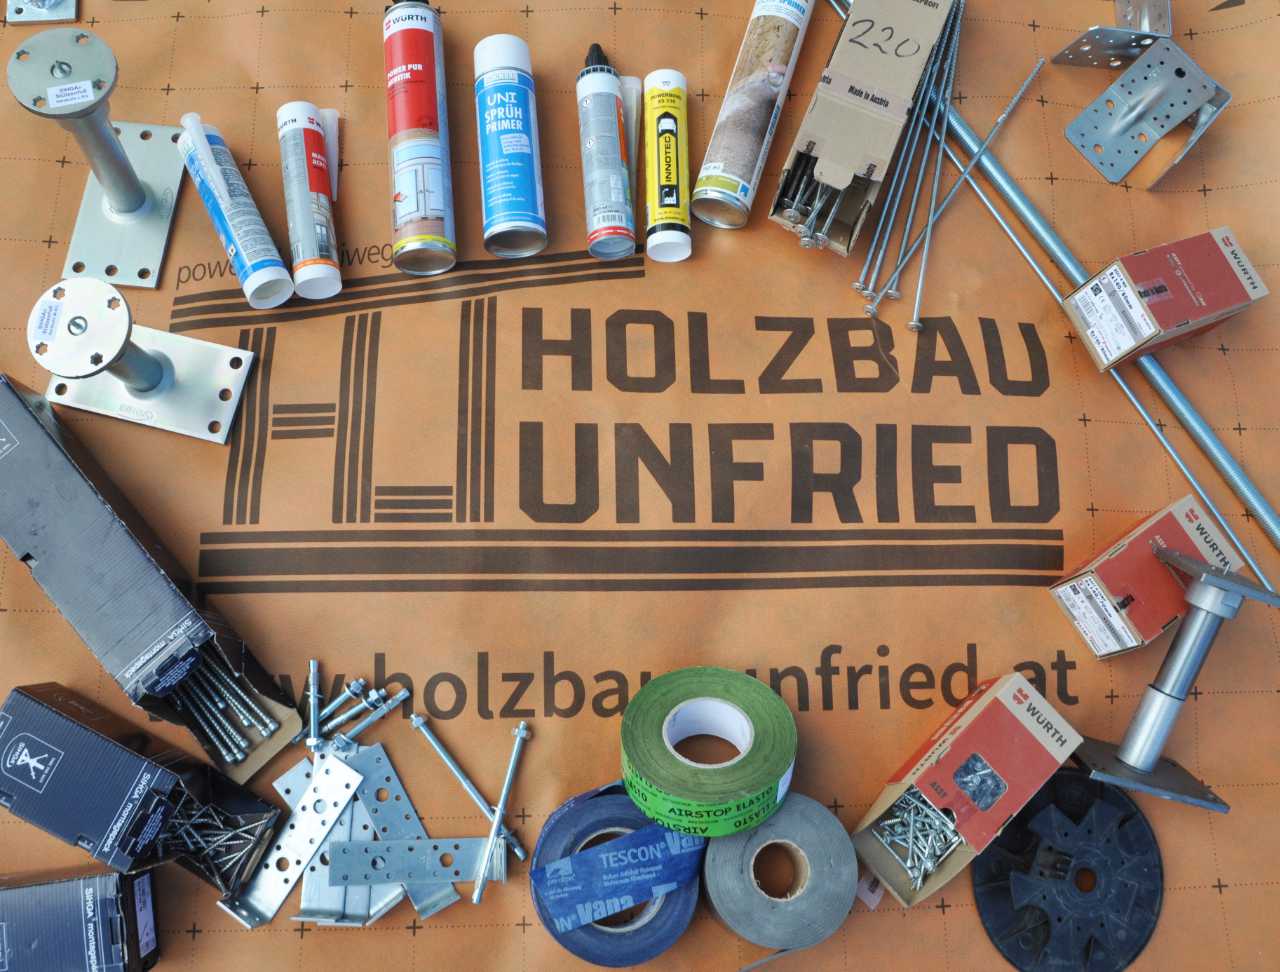 Direktverkauf_Holzbau-Unfried1